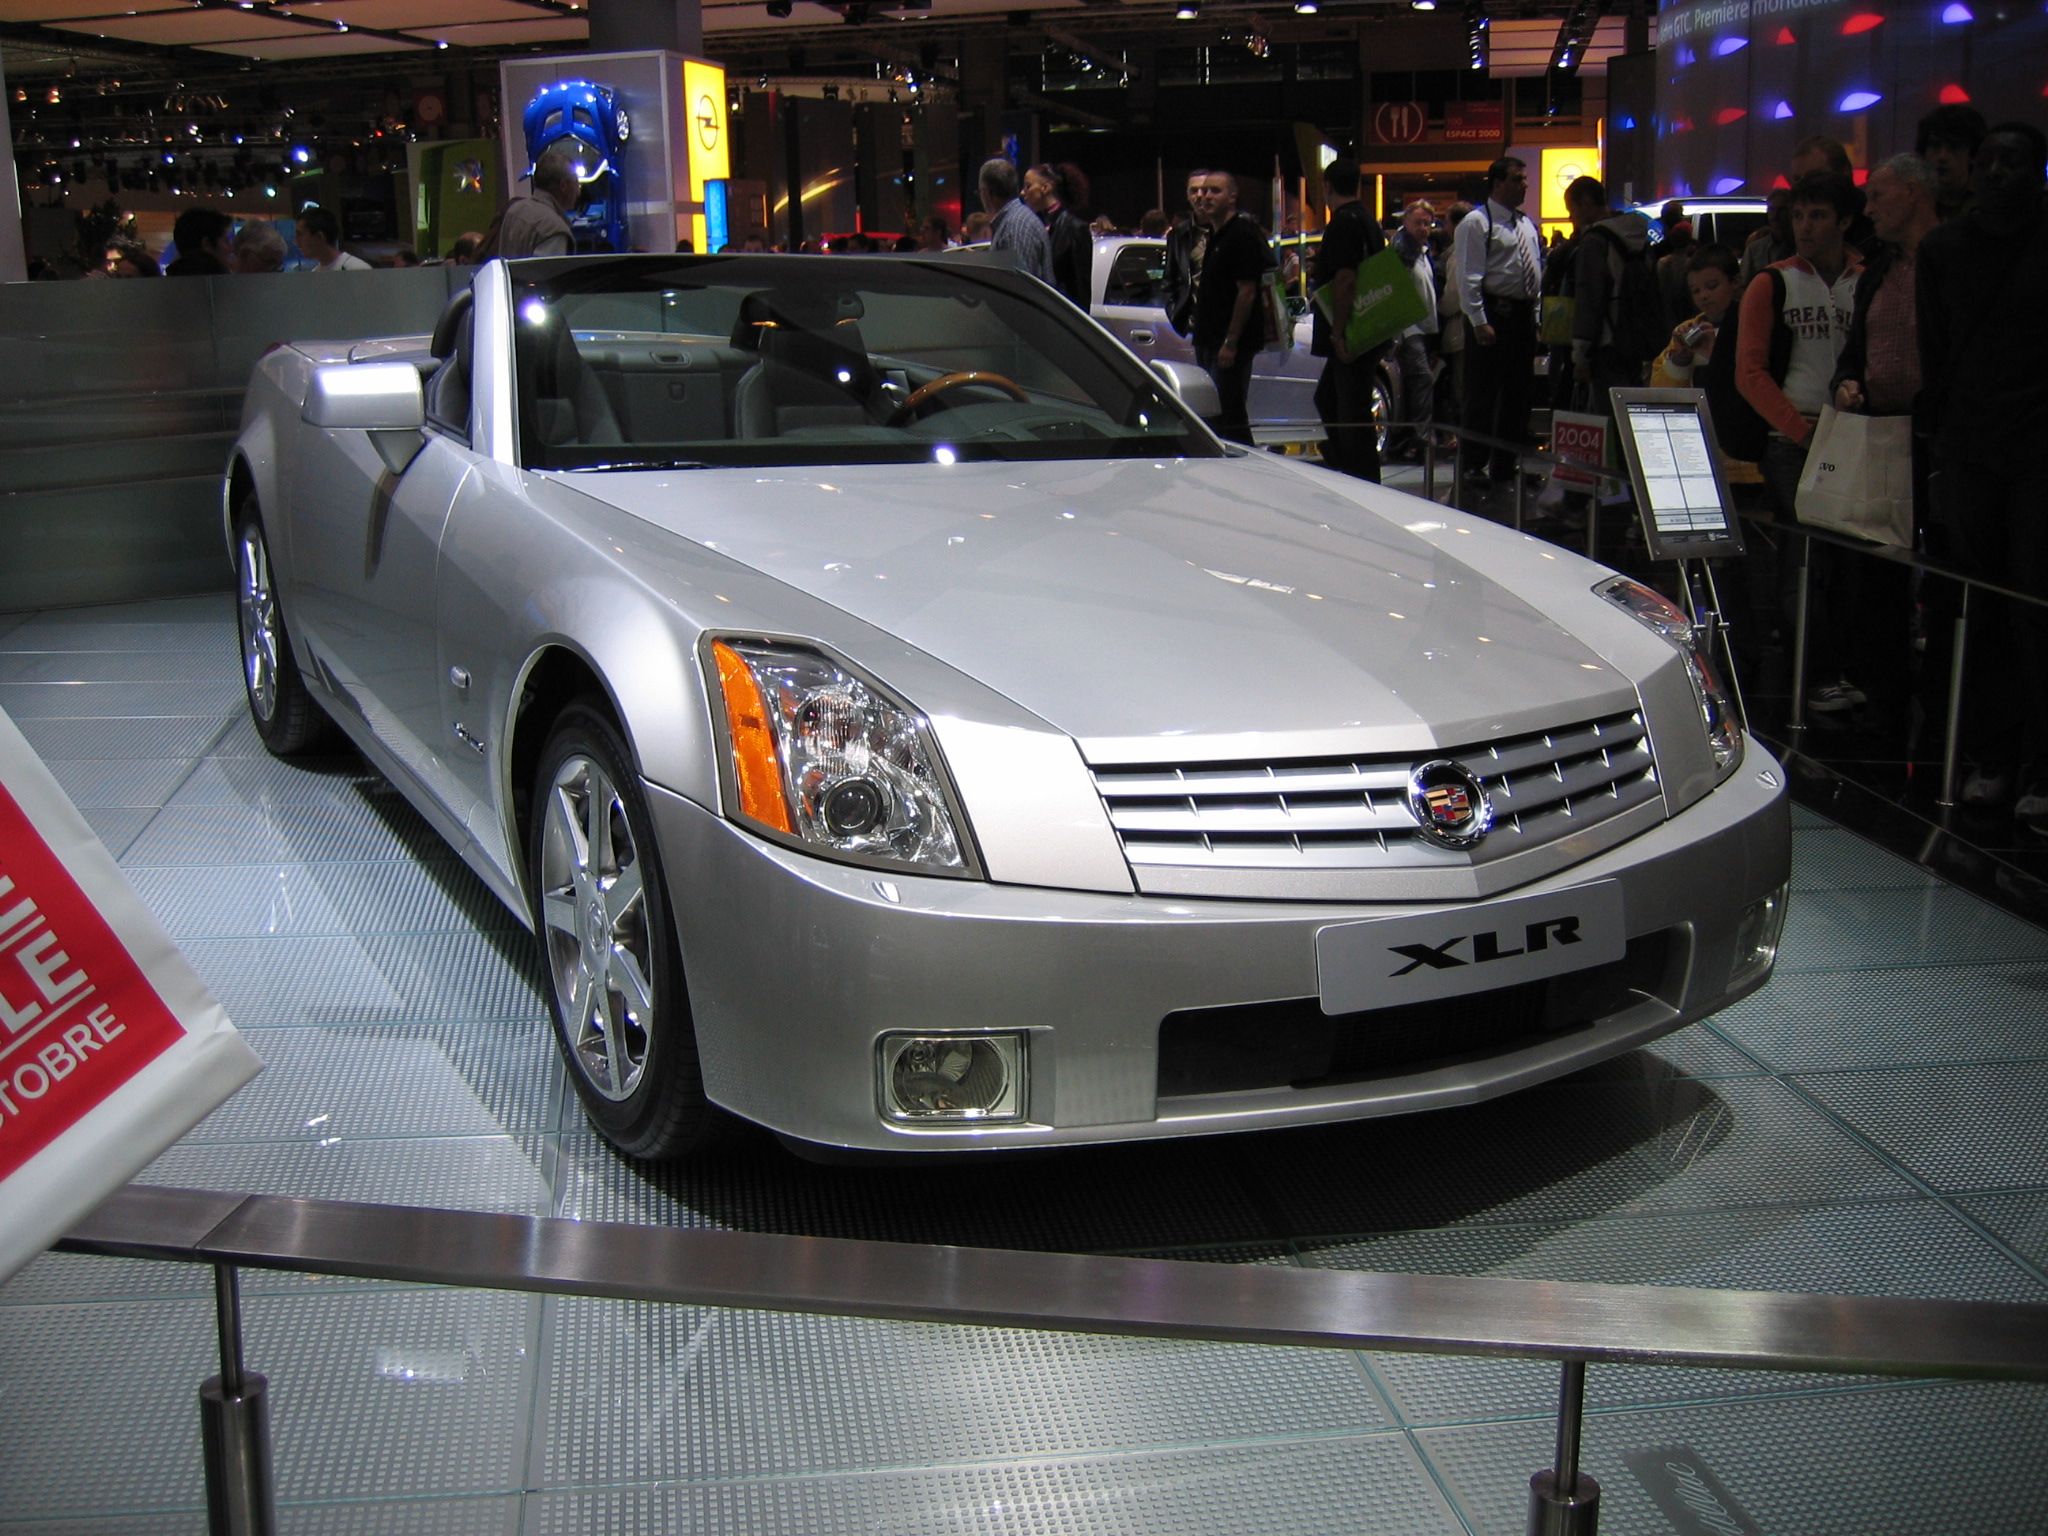 The 2009 Cadillac XLR on display.